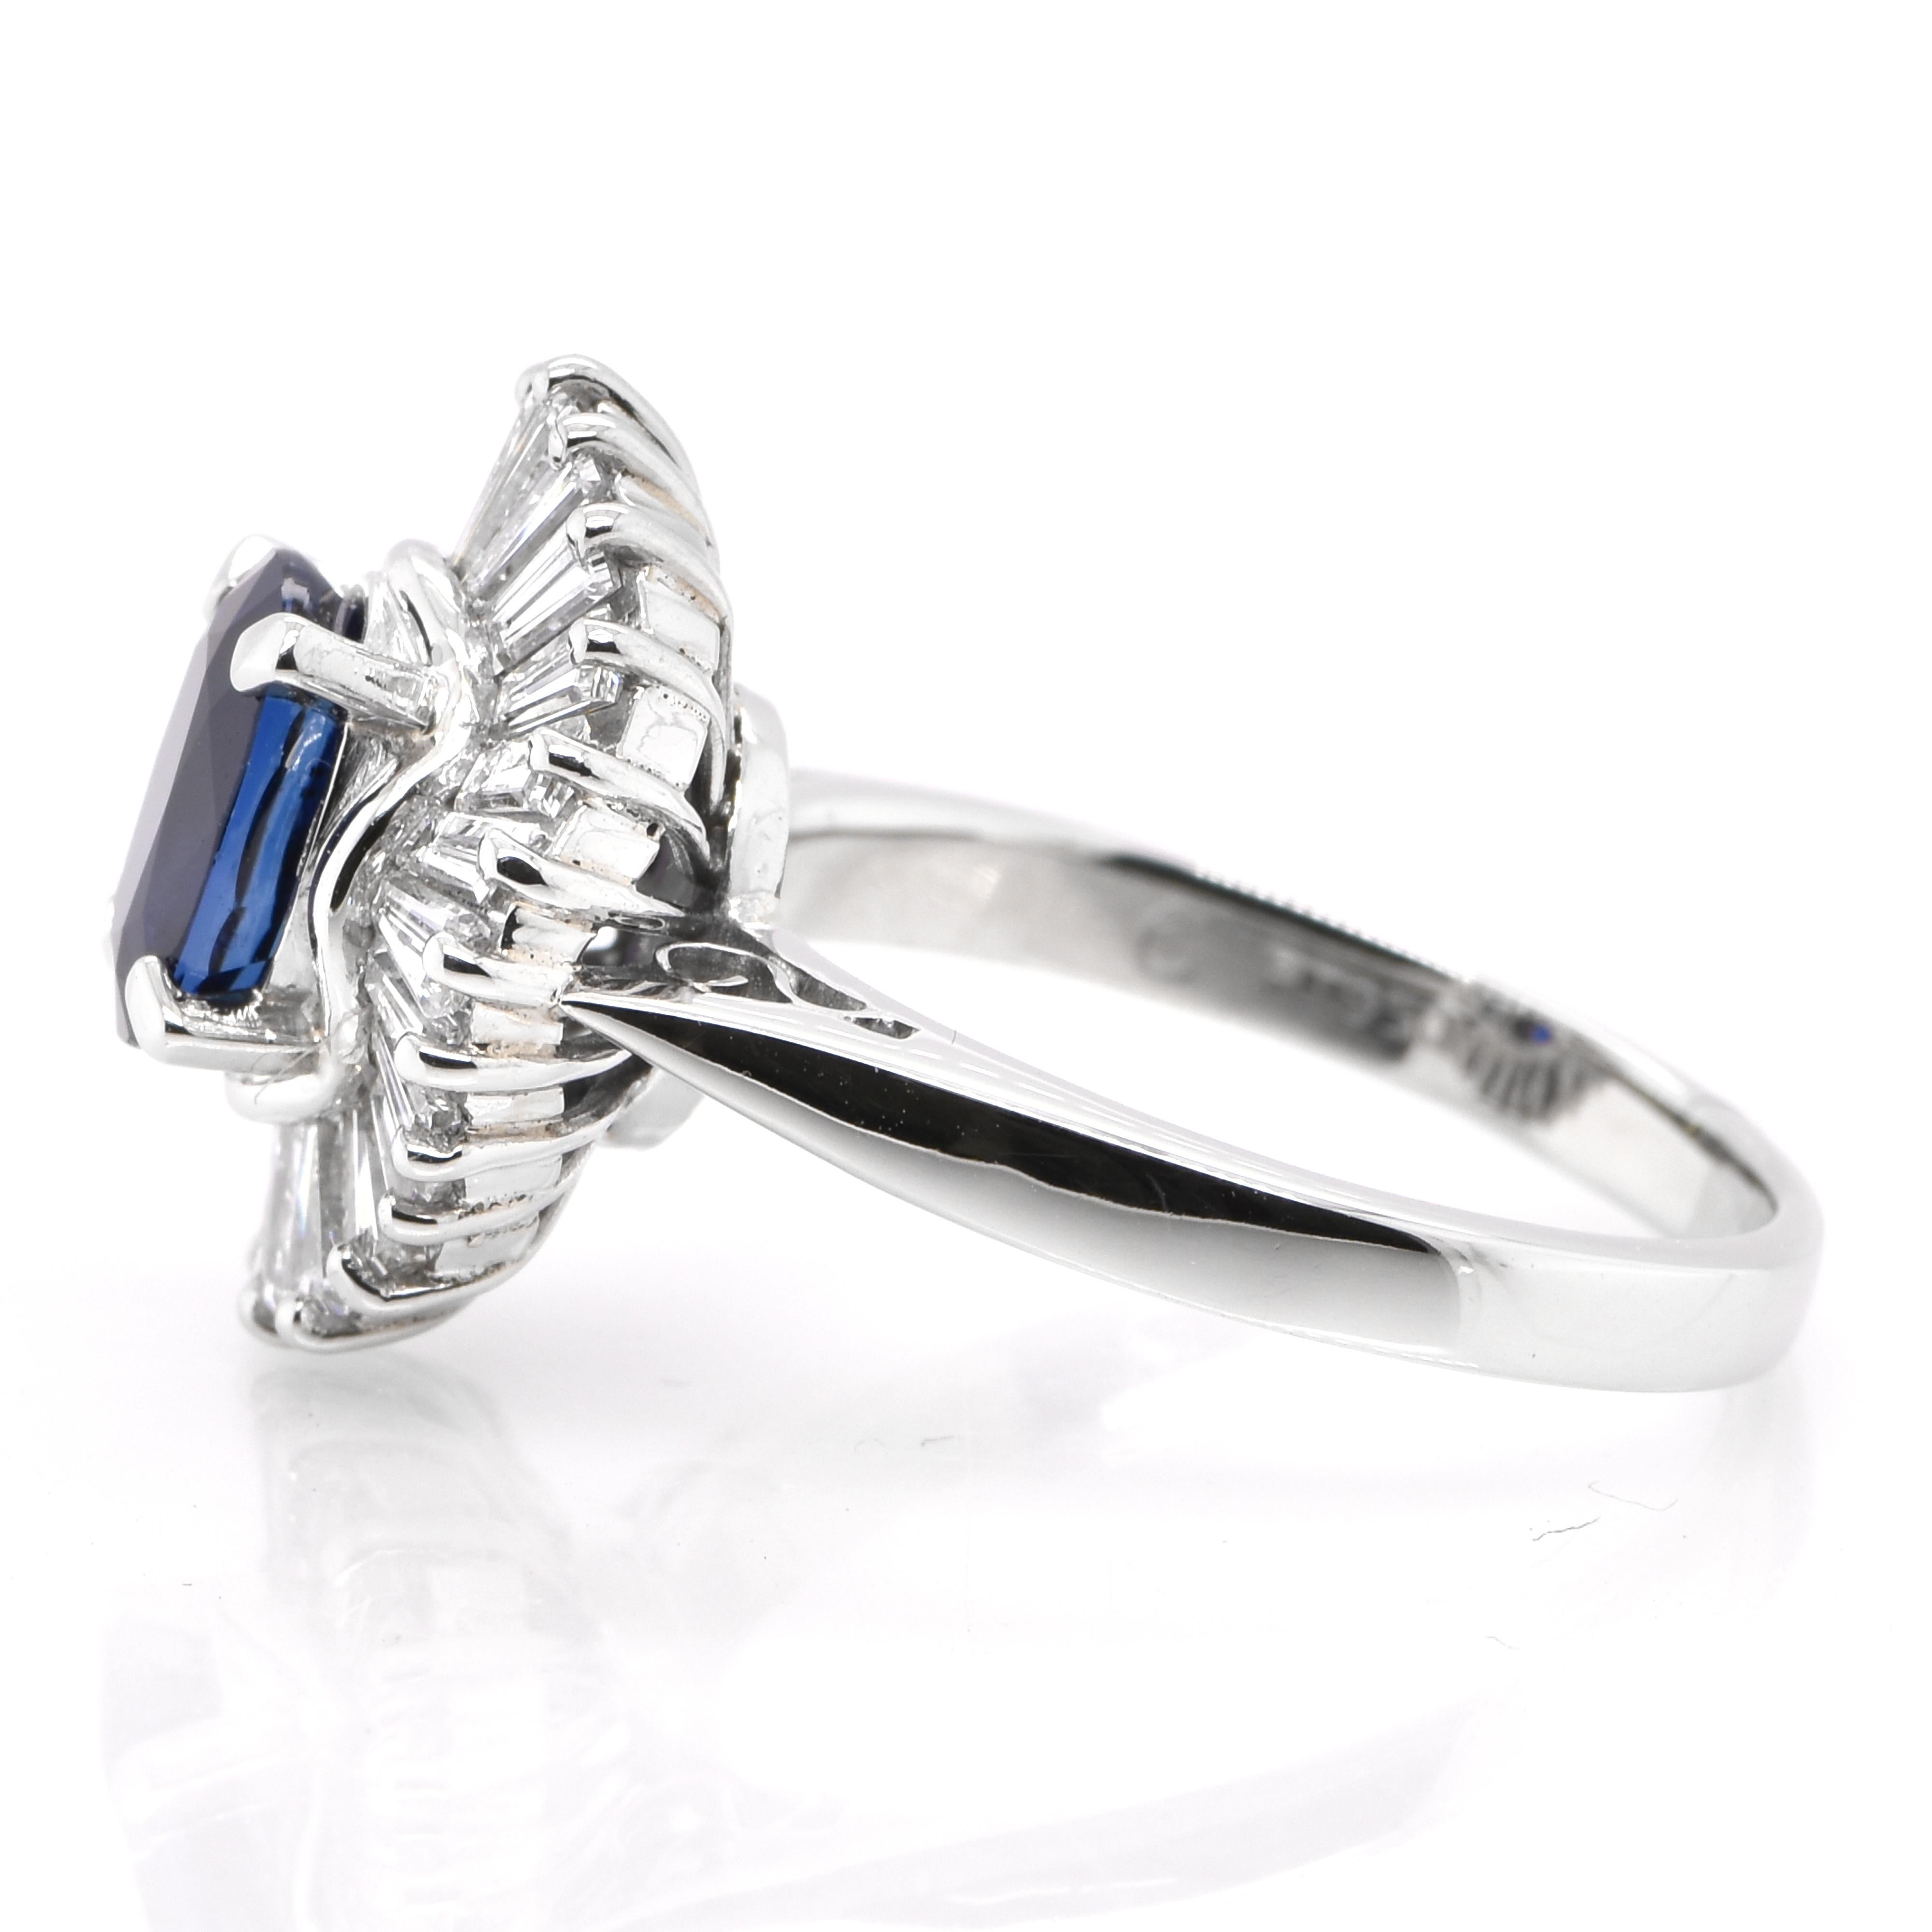 Oval Cut 1.16 Carat Natural Royal Blue Sapphire & Diamond Ballerina Ring set in Platinum